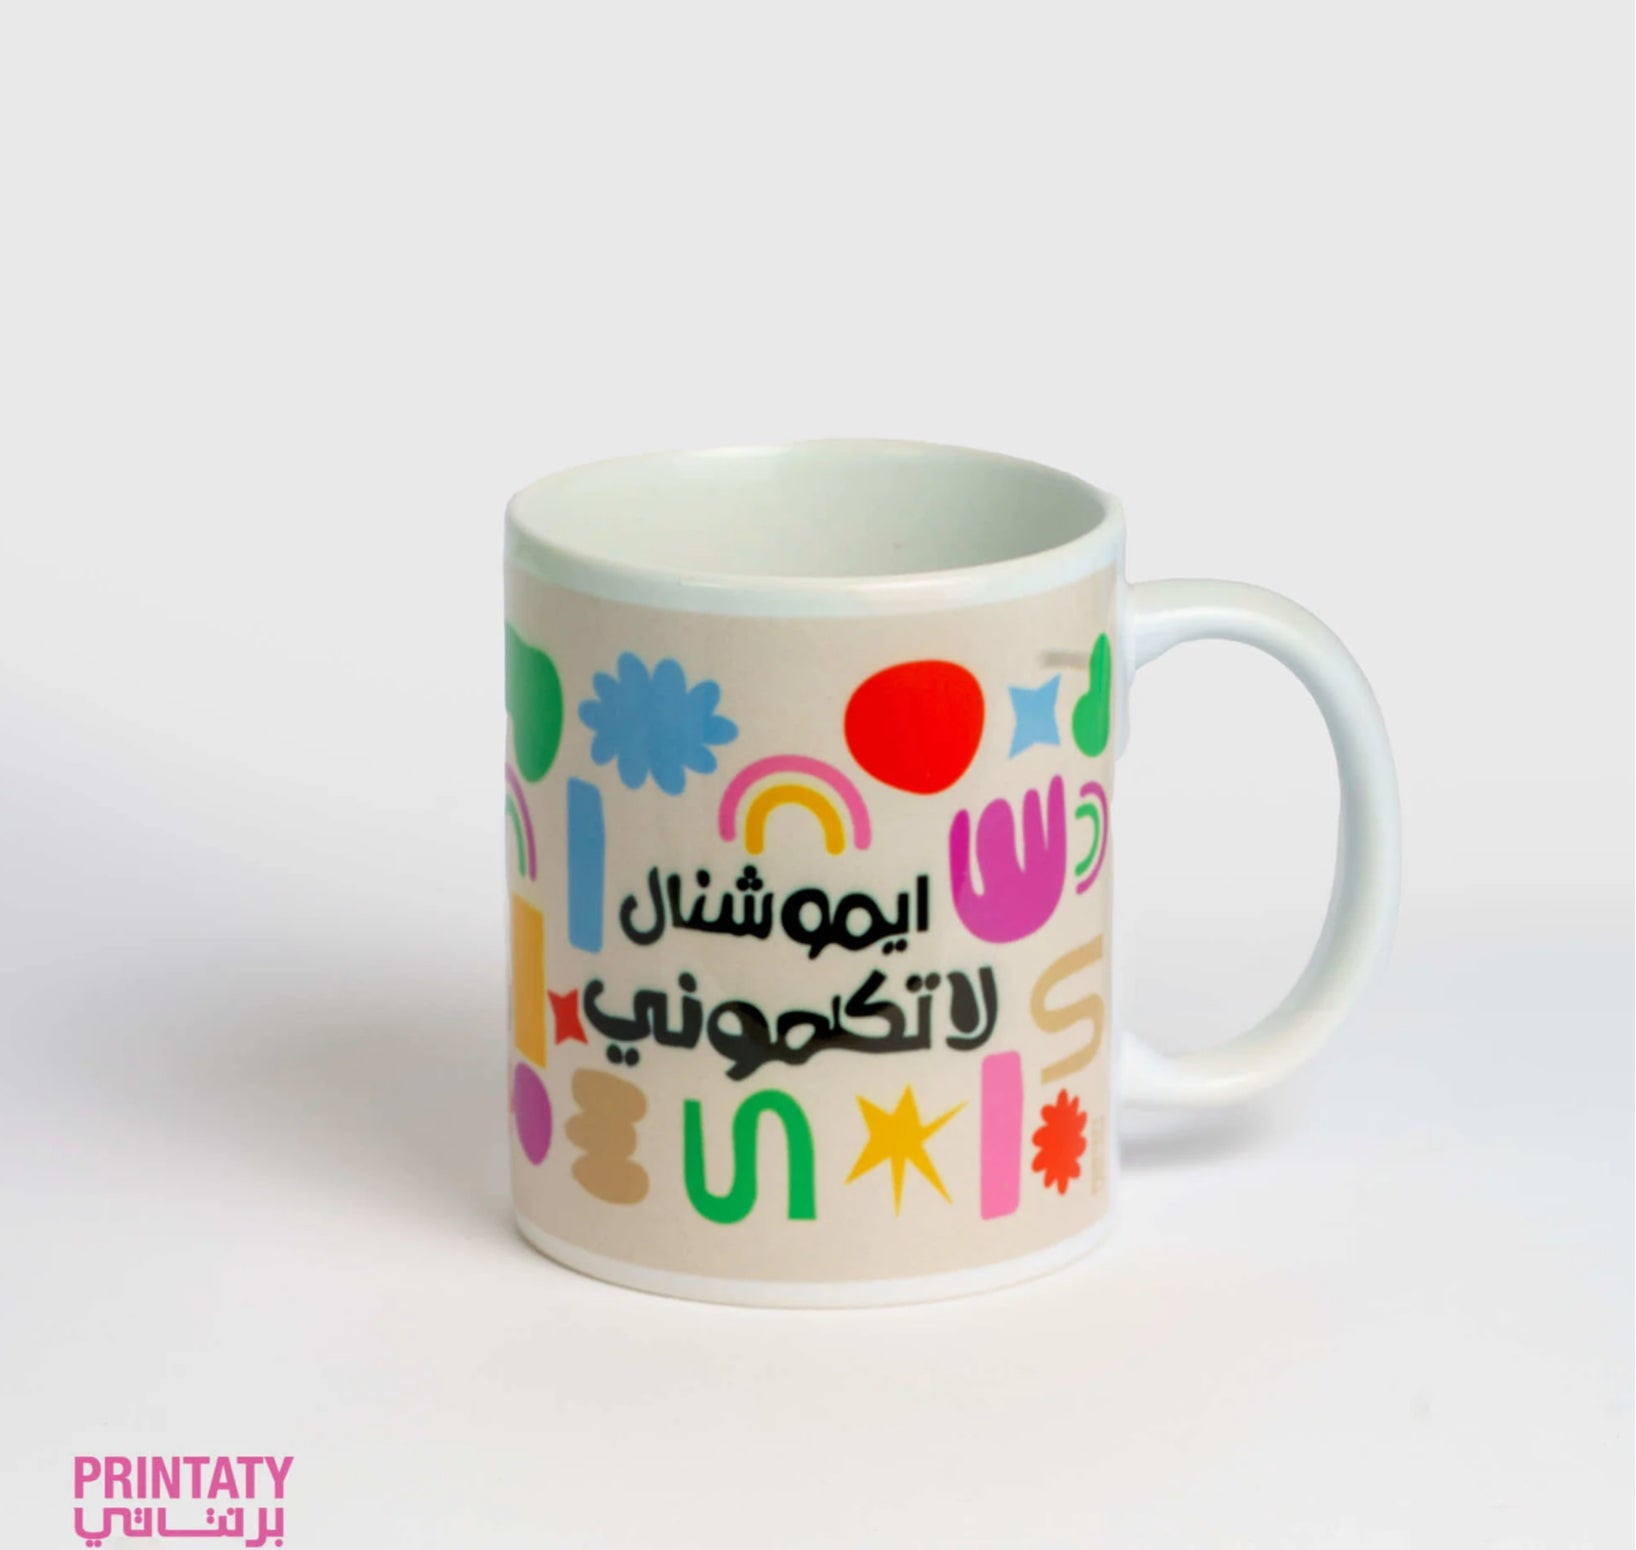 Printaty mugs:Emotional